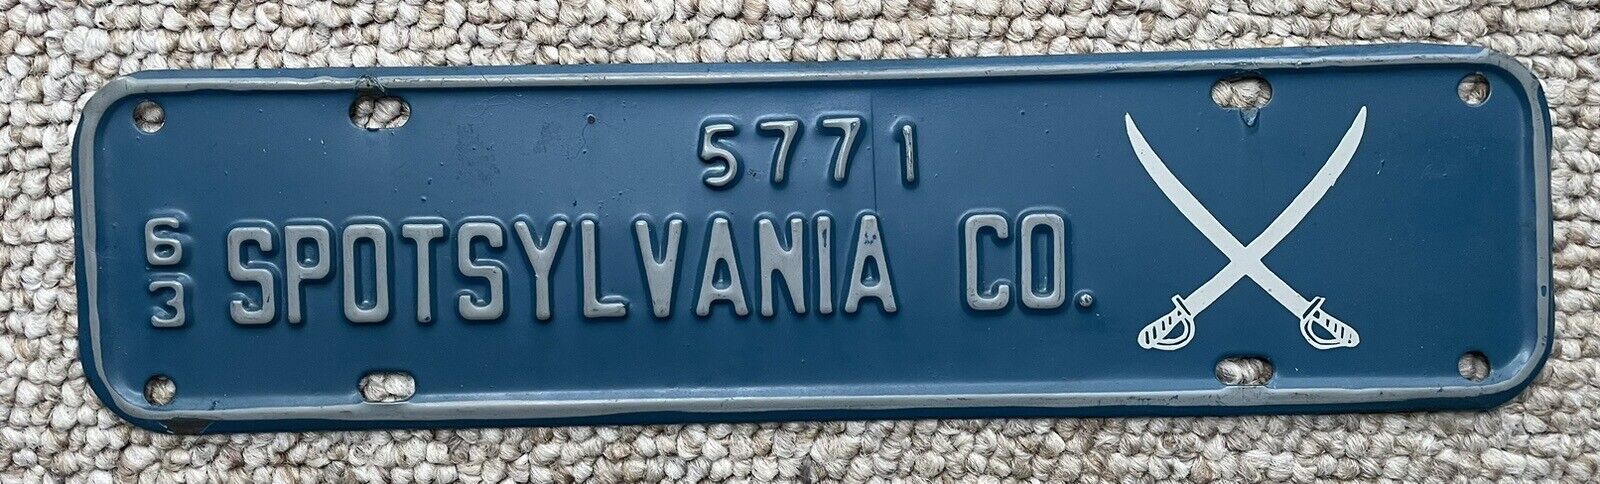 1963 Spotsylvania Co. Virginia License Plate Topper, Issue #5771, Cross Sabers